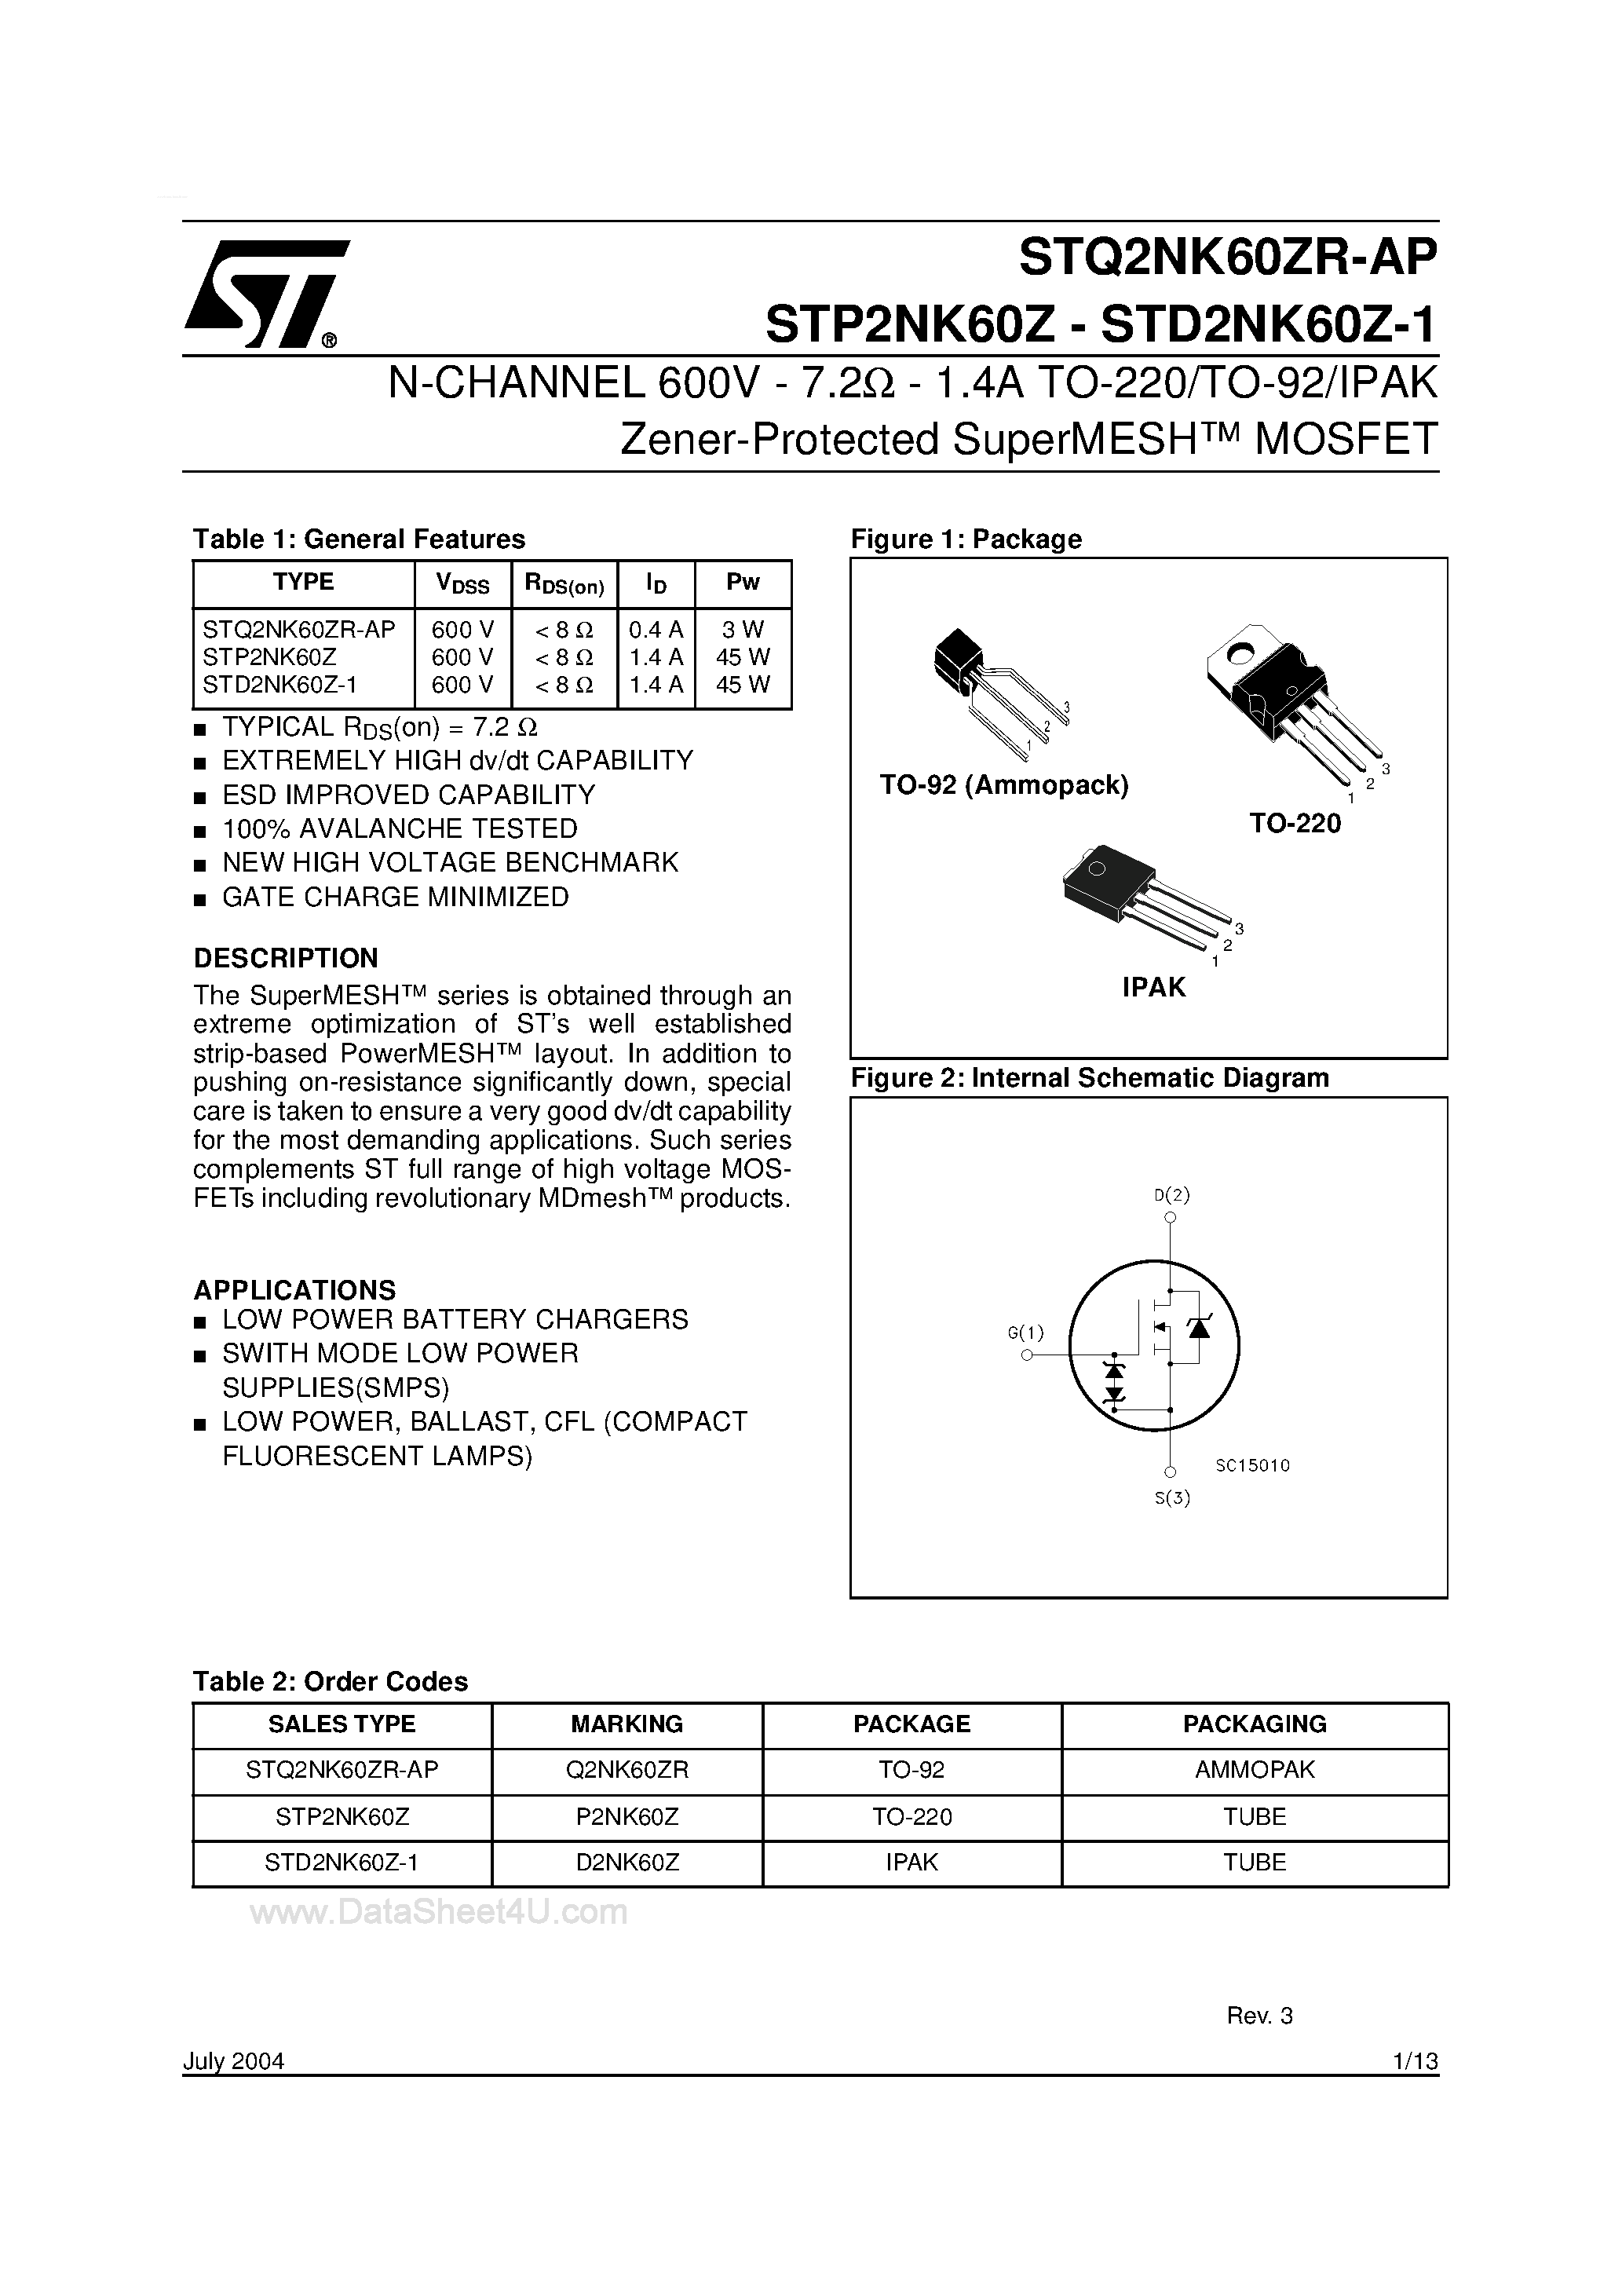 Даташит STQ2NK60ZR-AP - Zener-Protected SuperMESH MOSFET страница 1